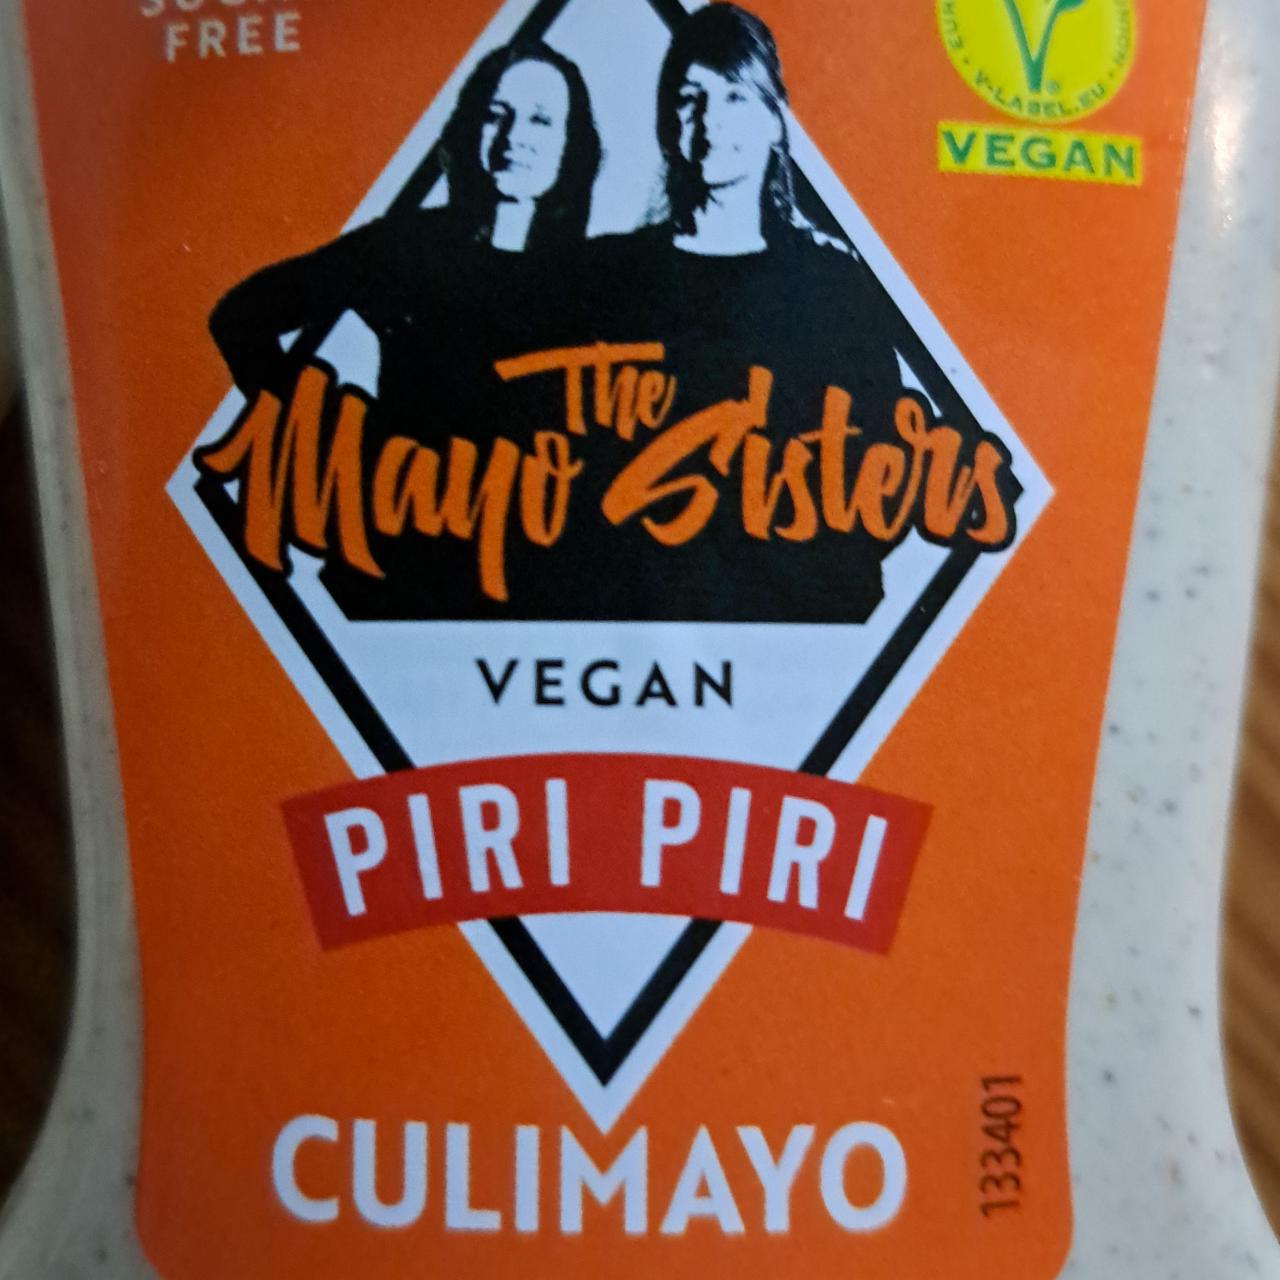 Fotografie - Culimayo Piri Piri Vegan The Mayo Sisters